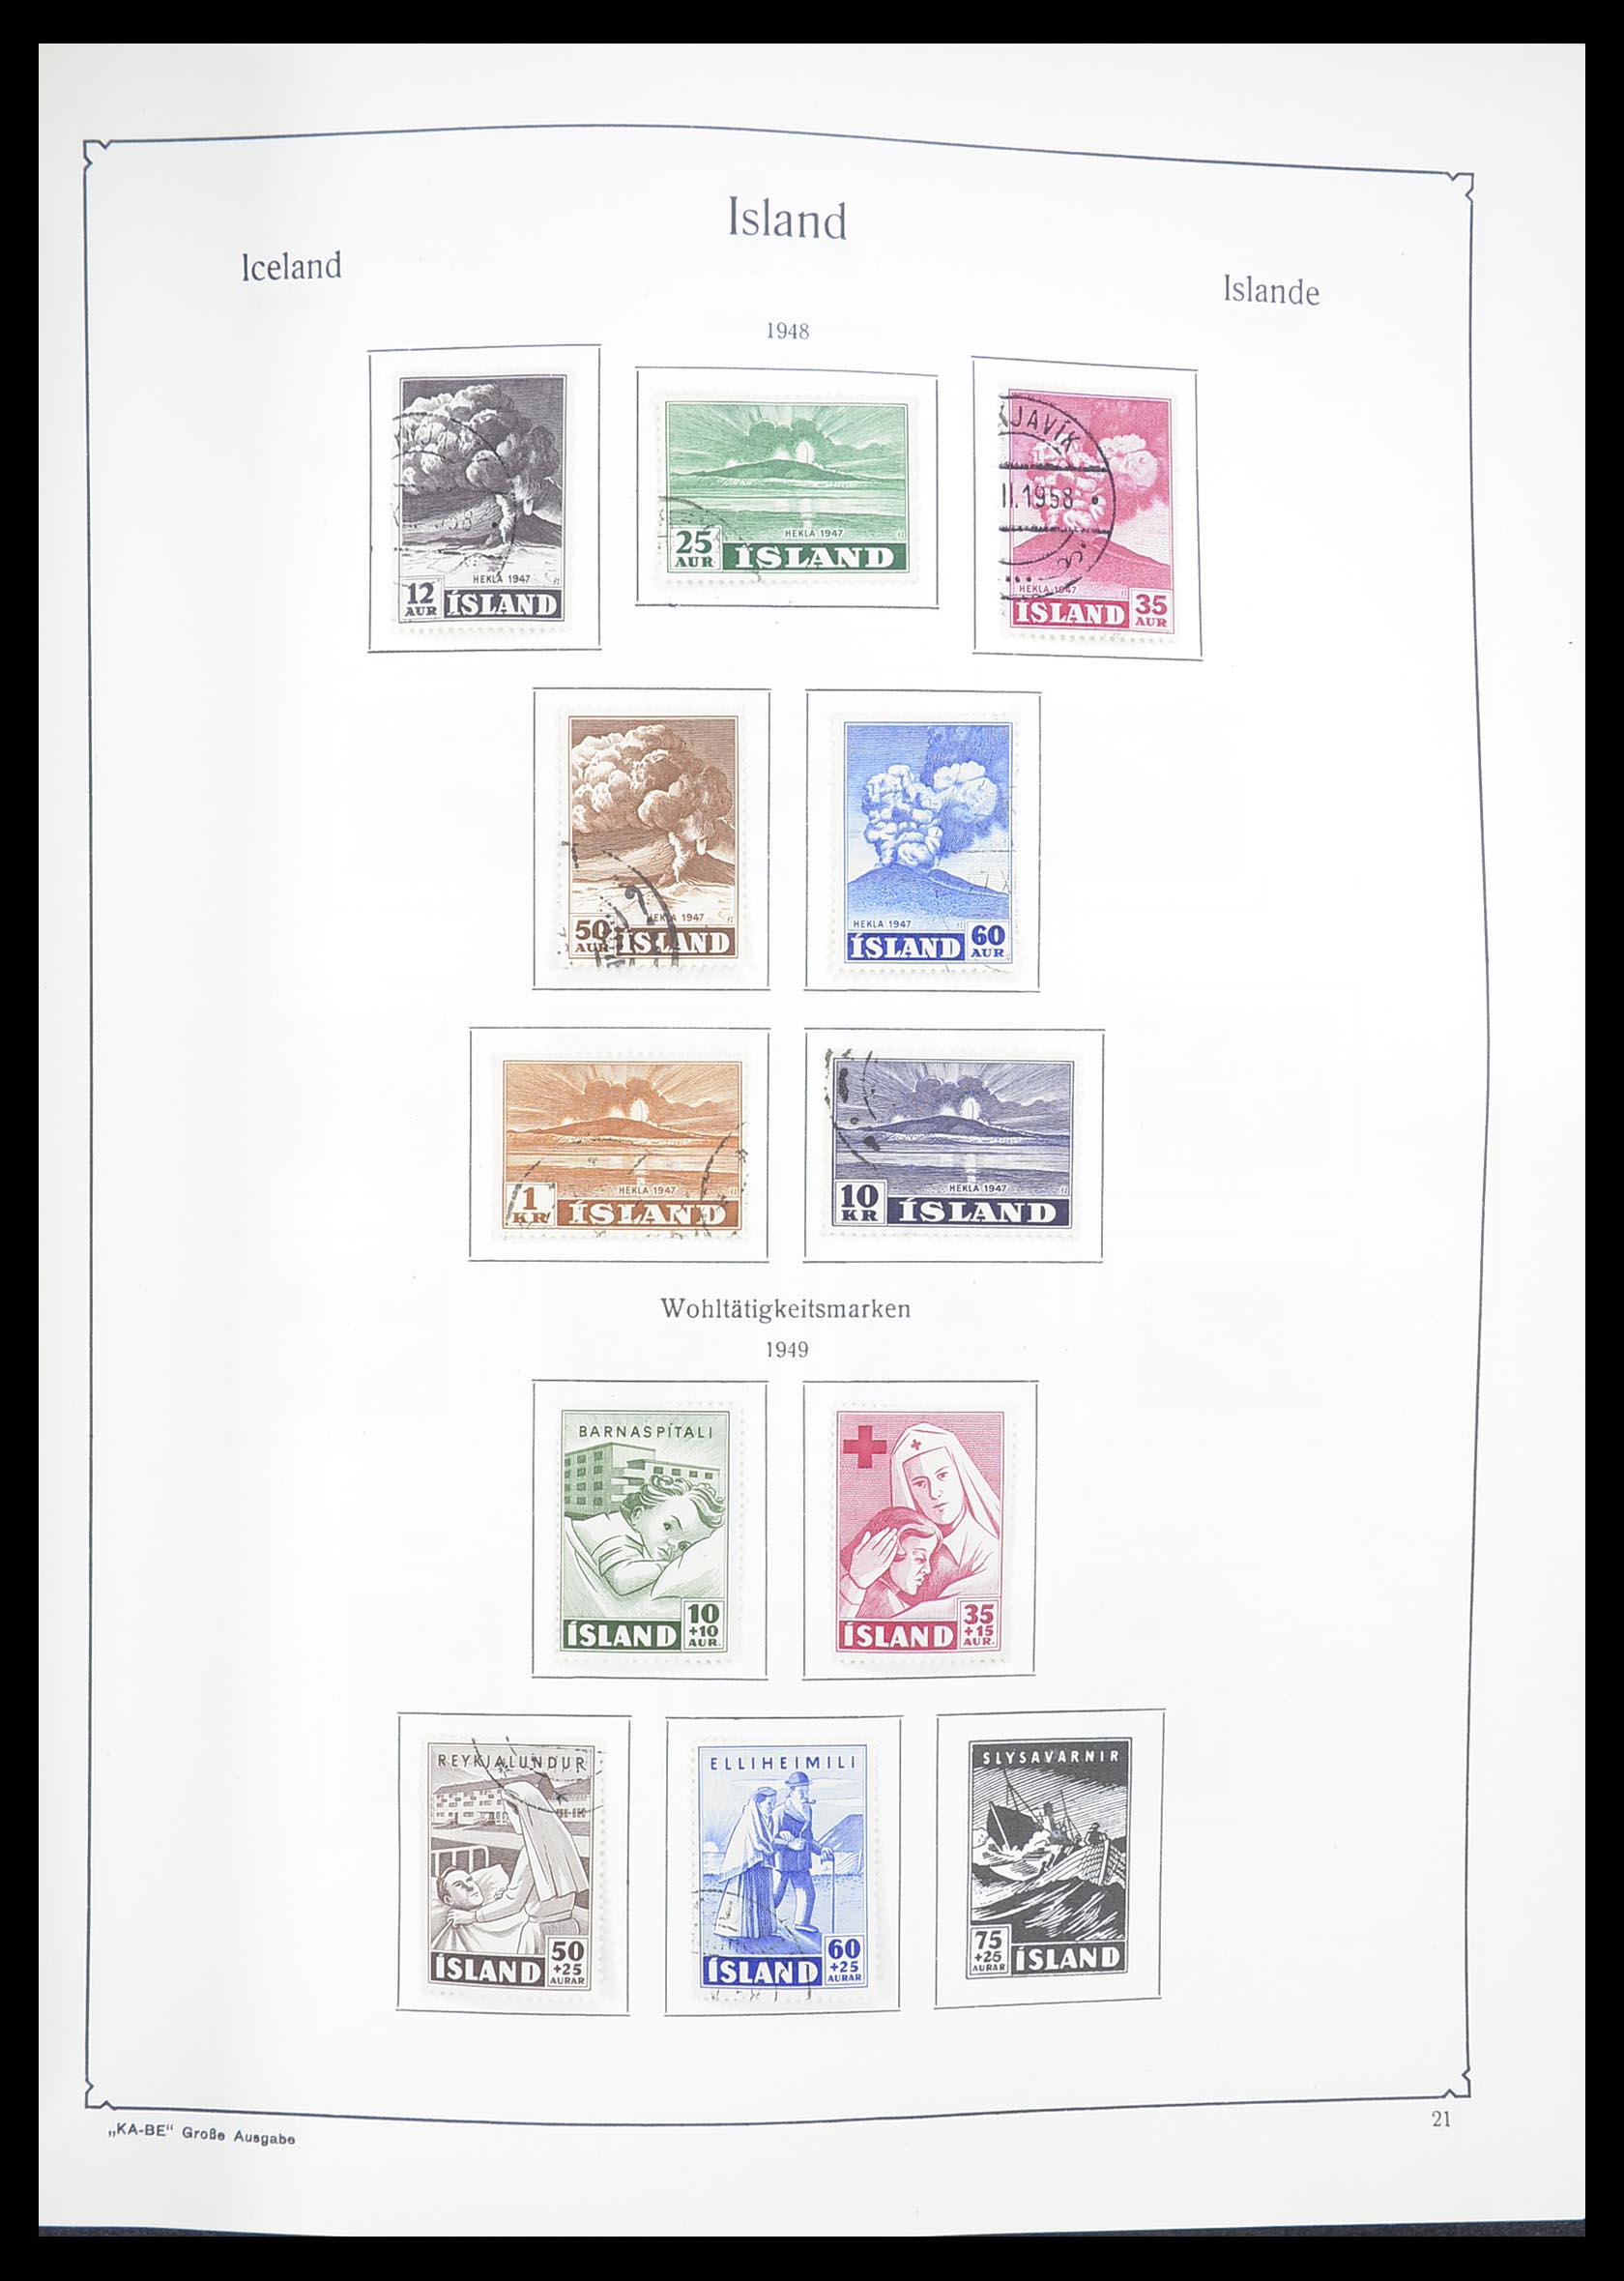 33379 077 - Stamp collection 33379 Scandinavia 1856-1972.